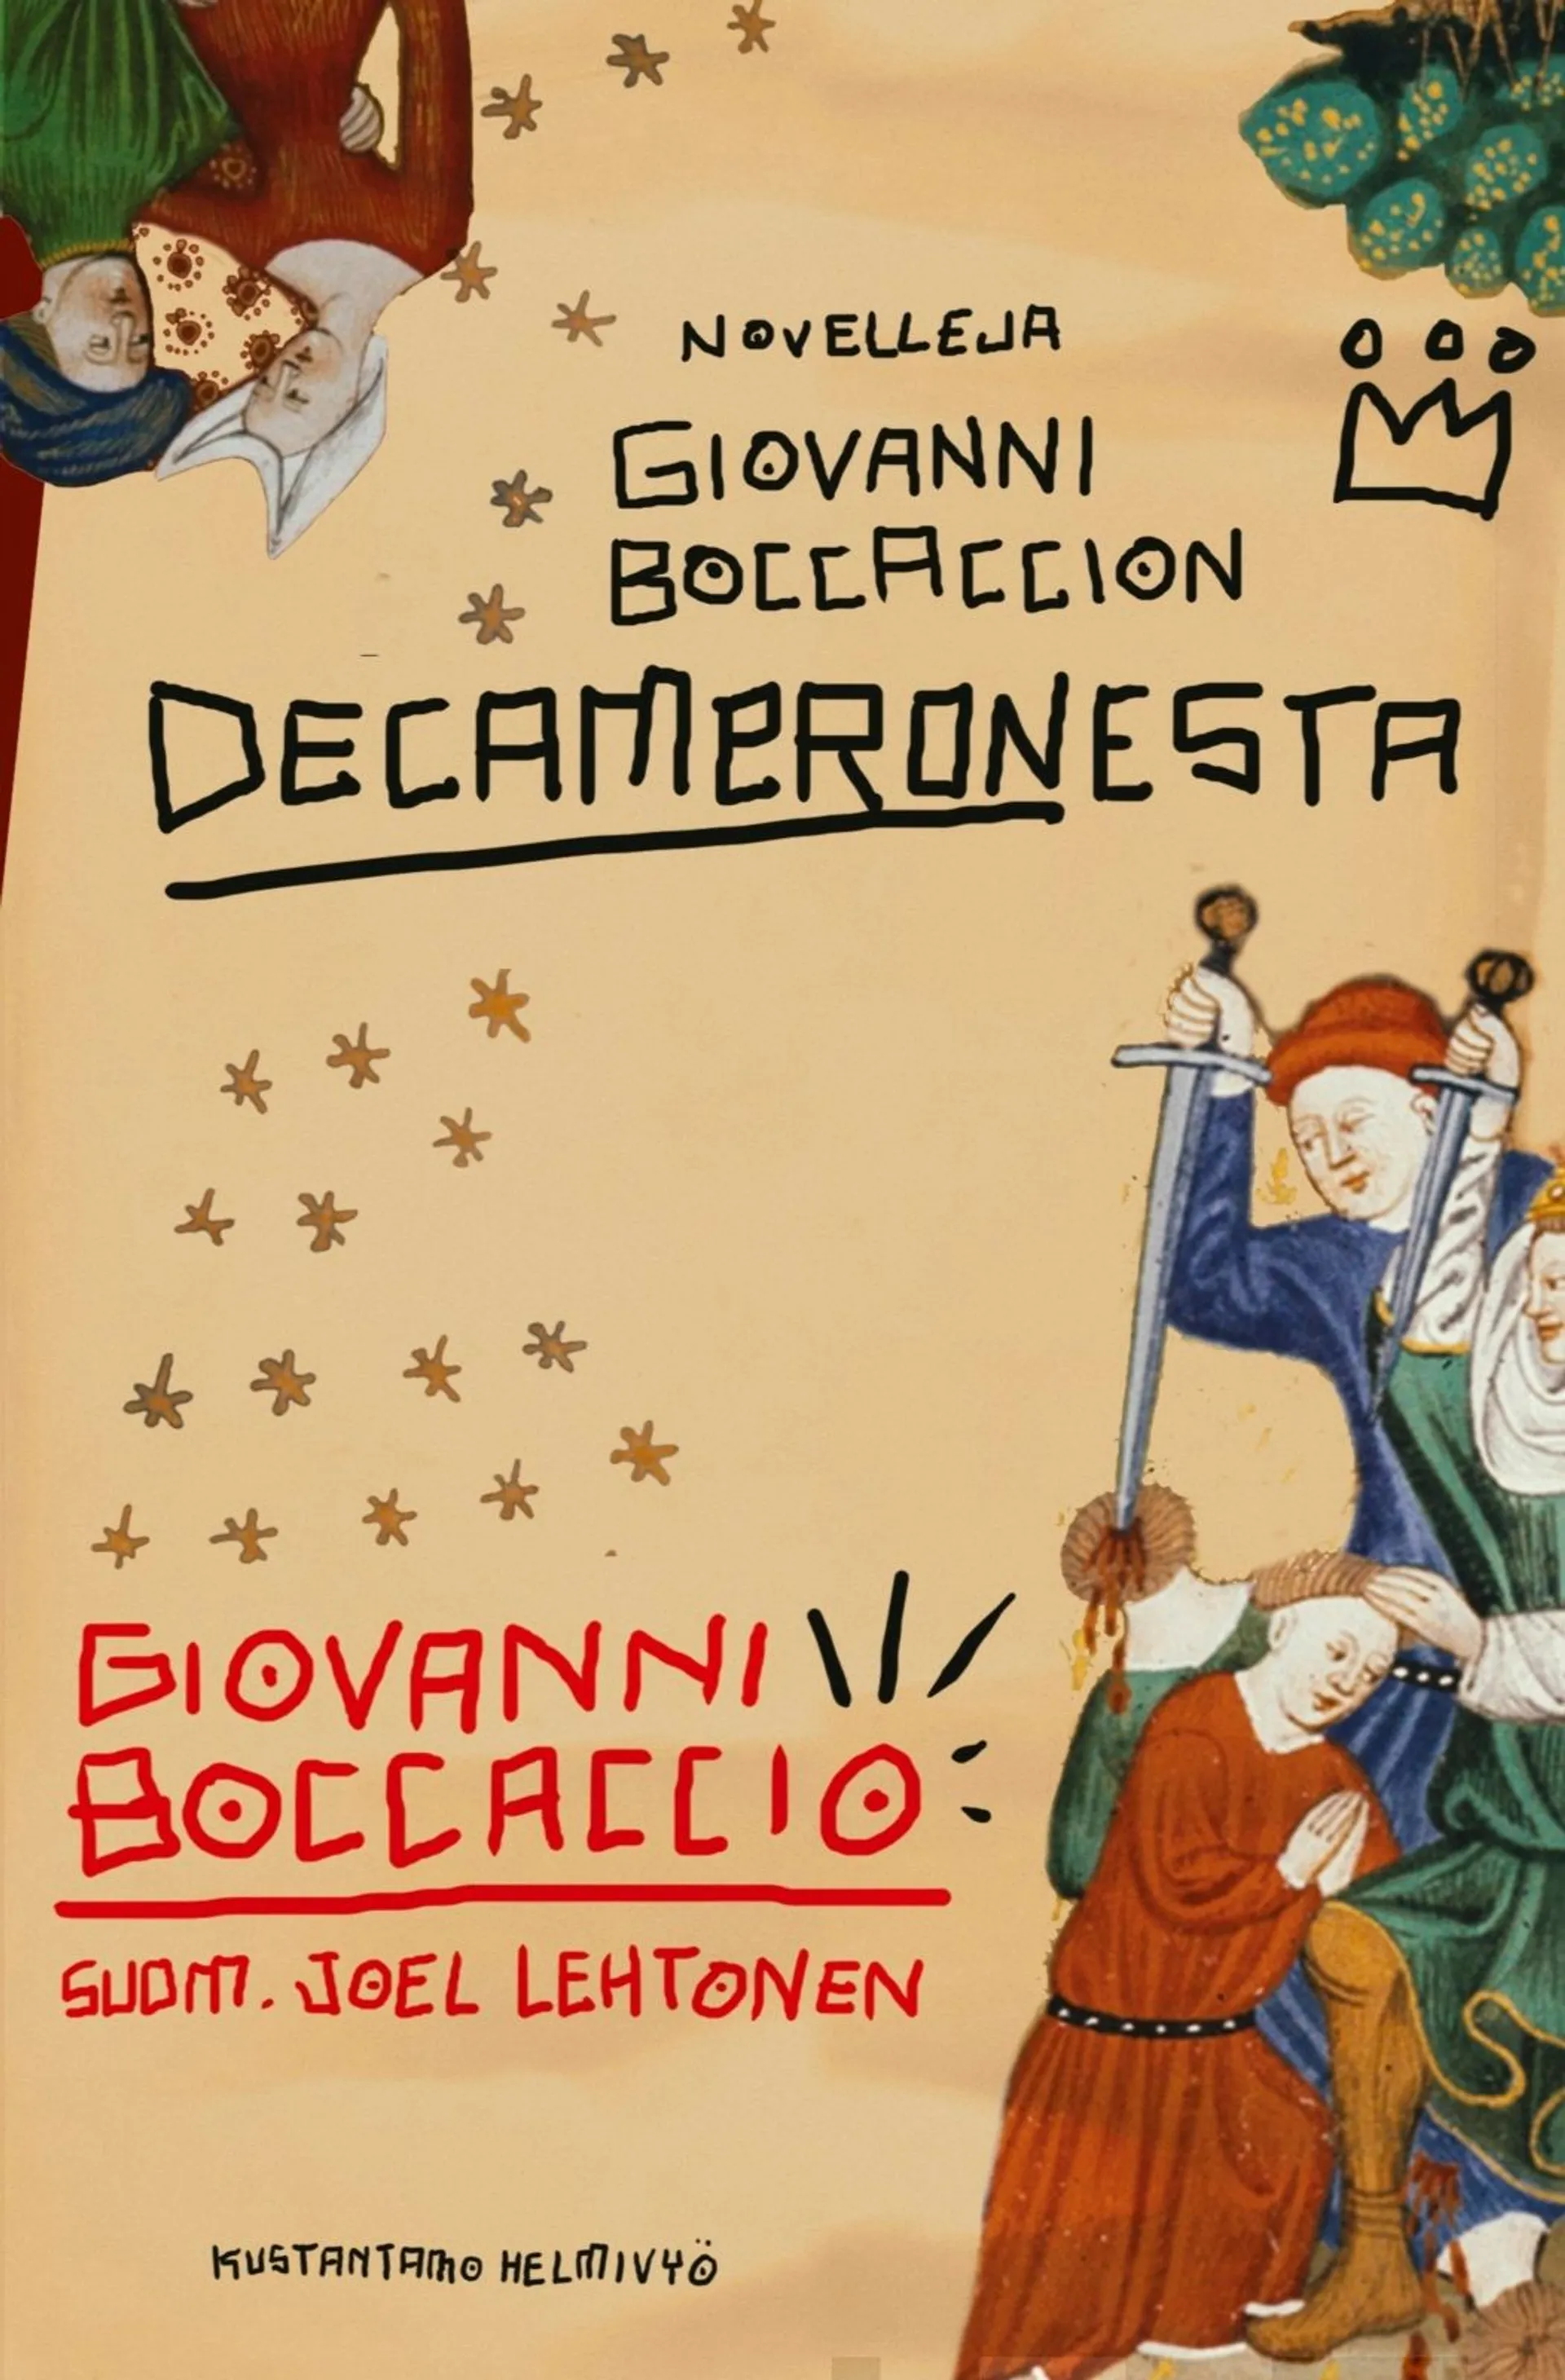 Boccaccio, Novelleja Decameronesta